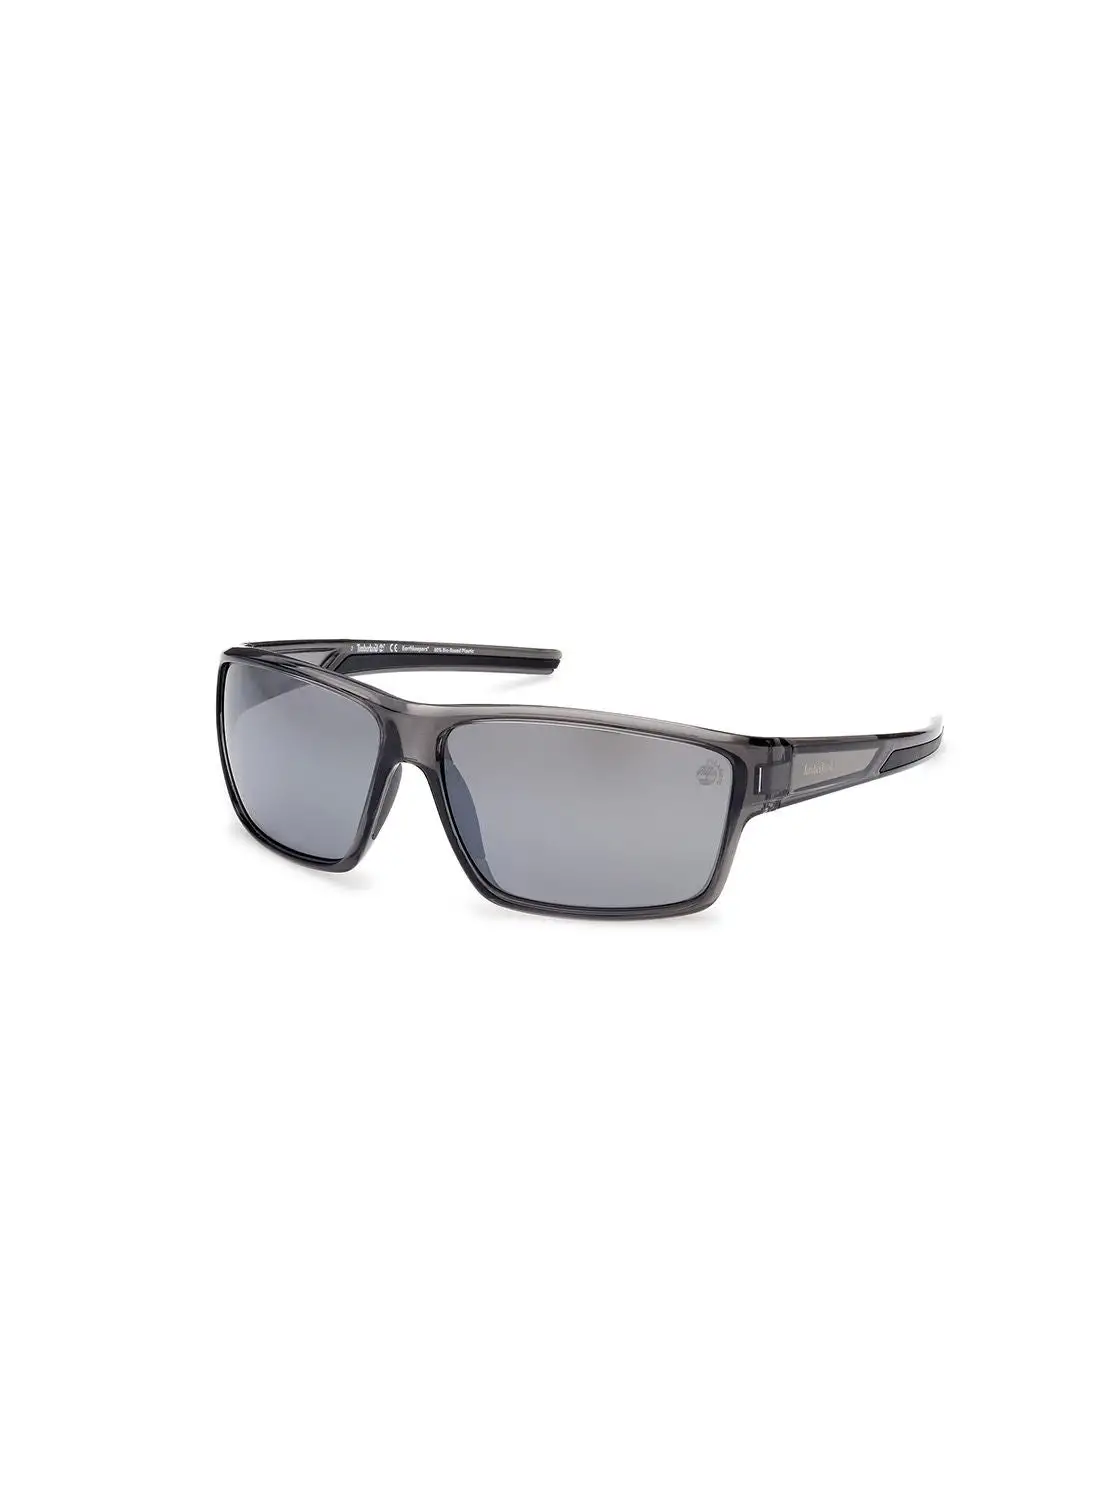 Timberland Men's Polarized Rectangular Sunglasses - TB927720D65 - Lens Size: 65 Mm